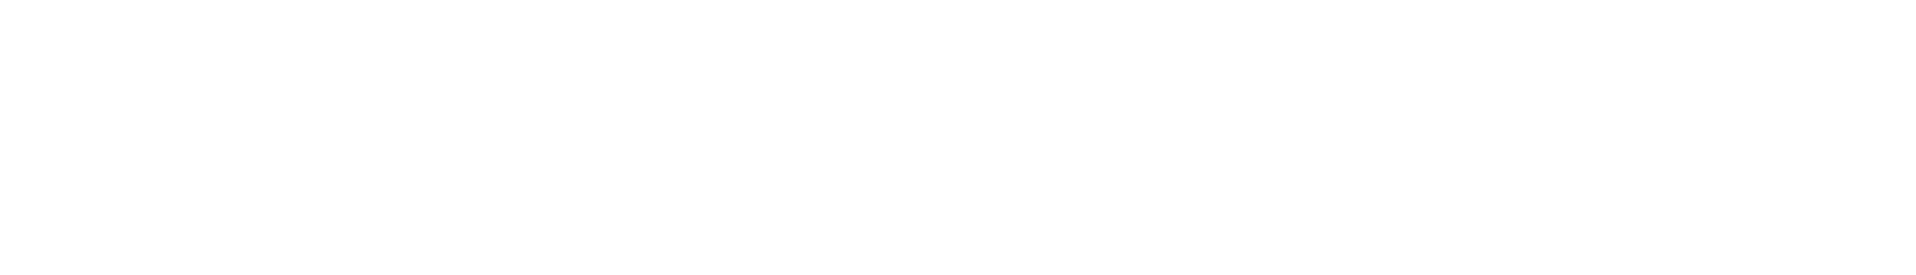 Heisenberg Robotics logo